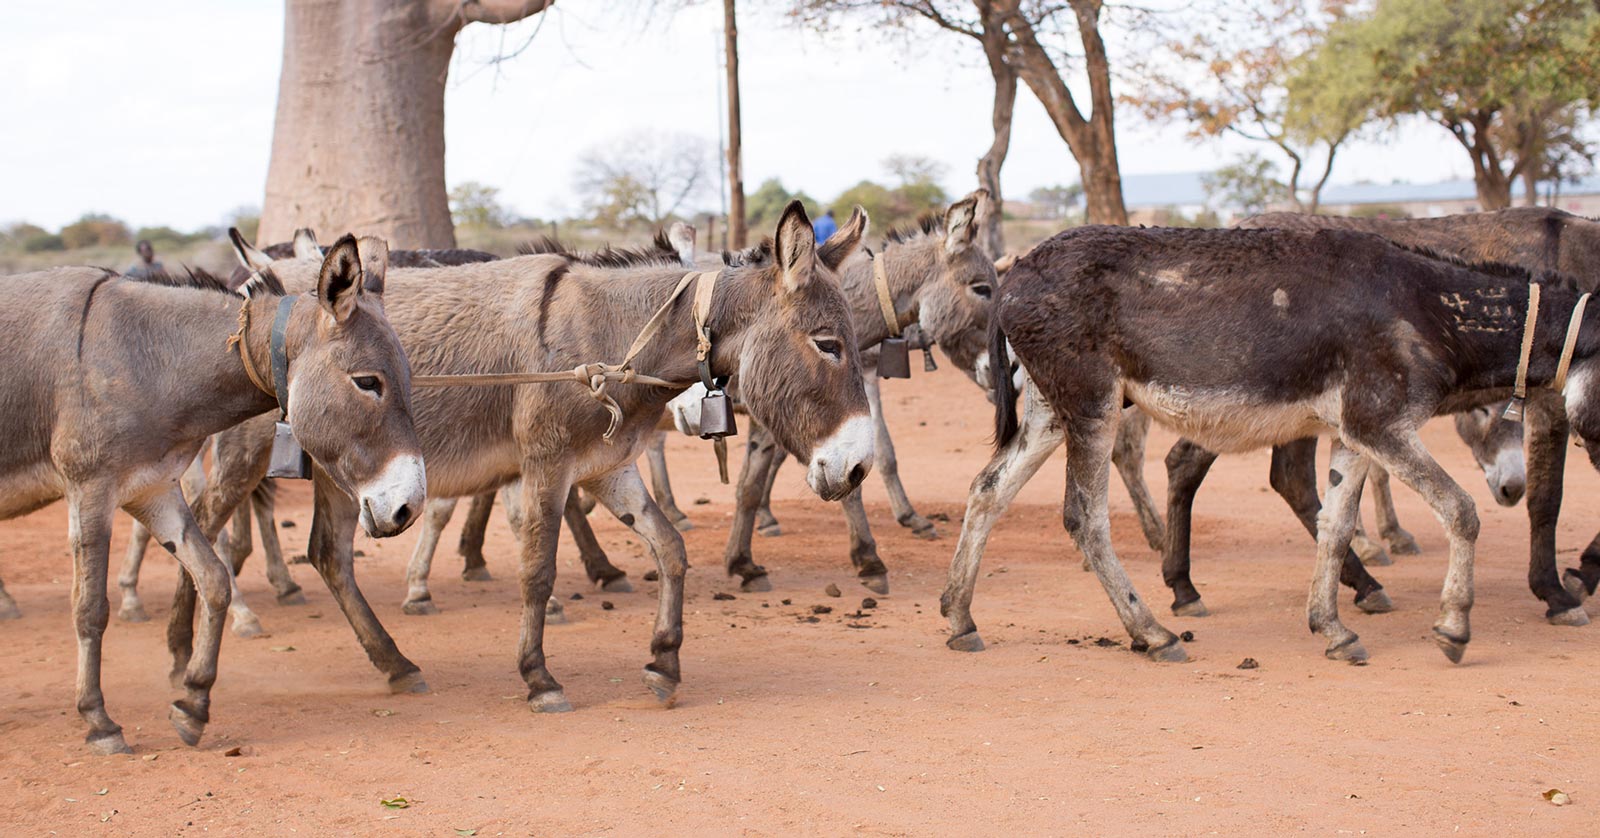 a group of donkeys walking together